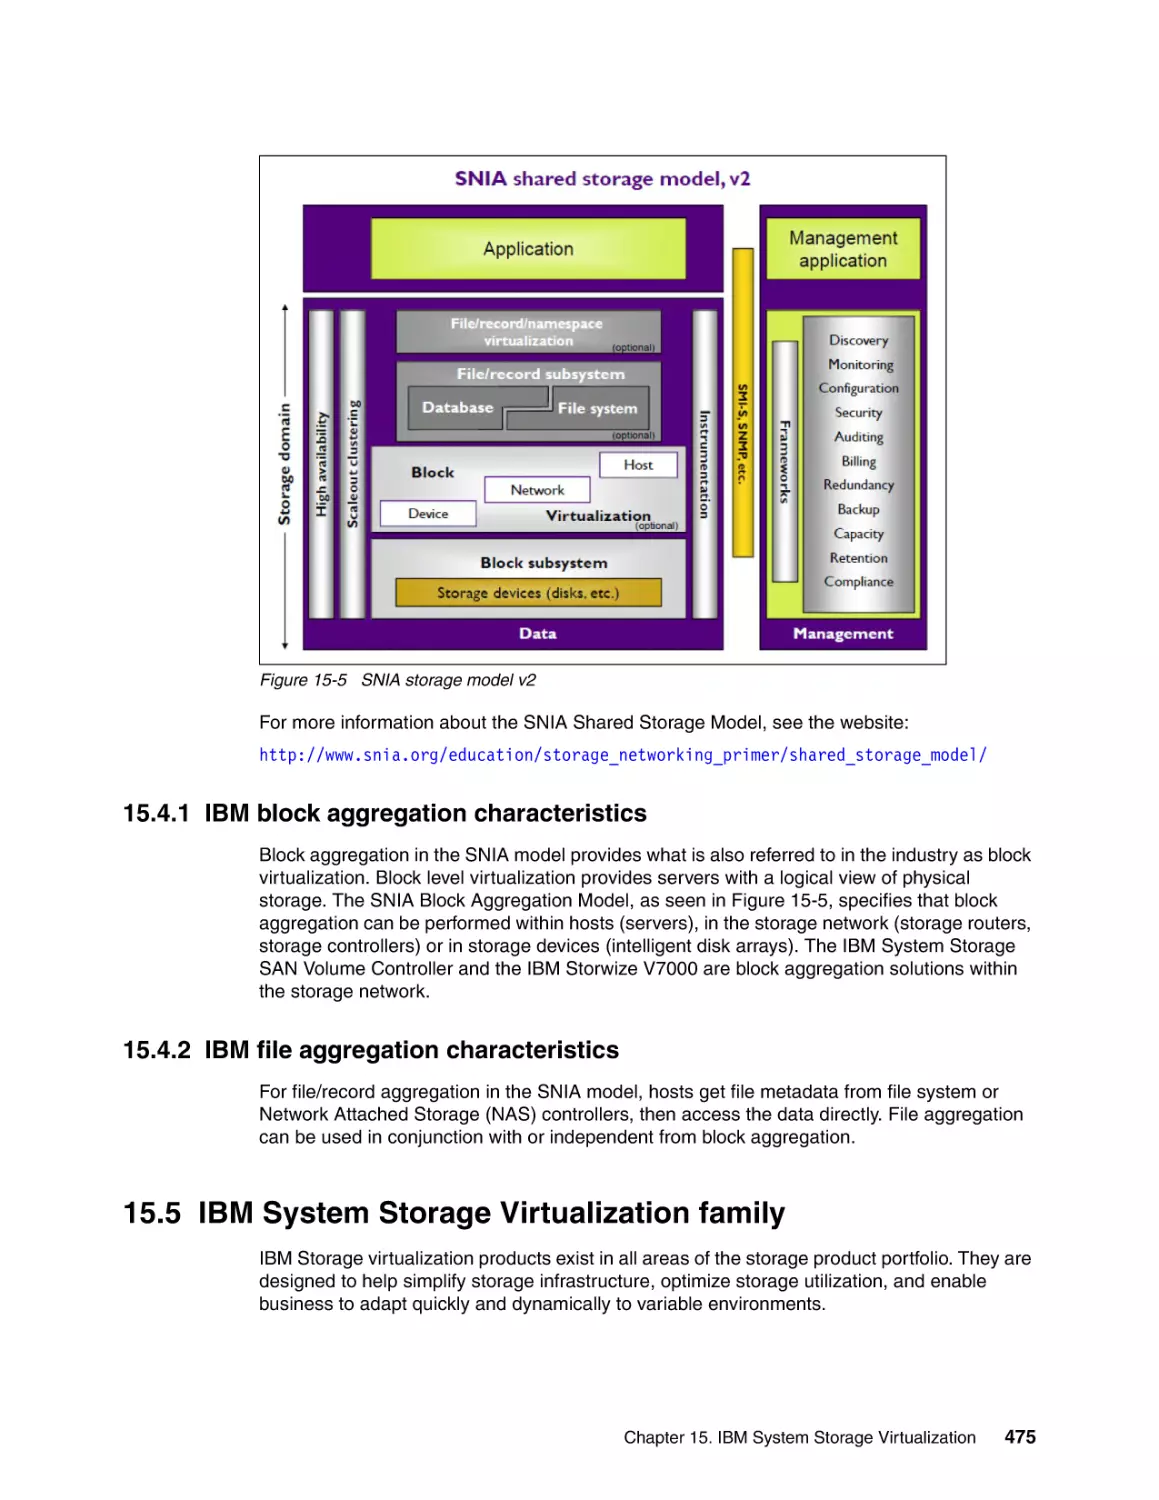 15.4.1 IBM block aggregation characteristics
15.4.2 IBM file aggregation characteristics
15.5 IBM System Storage Virtualization family